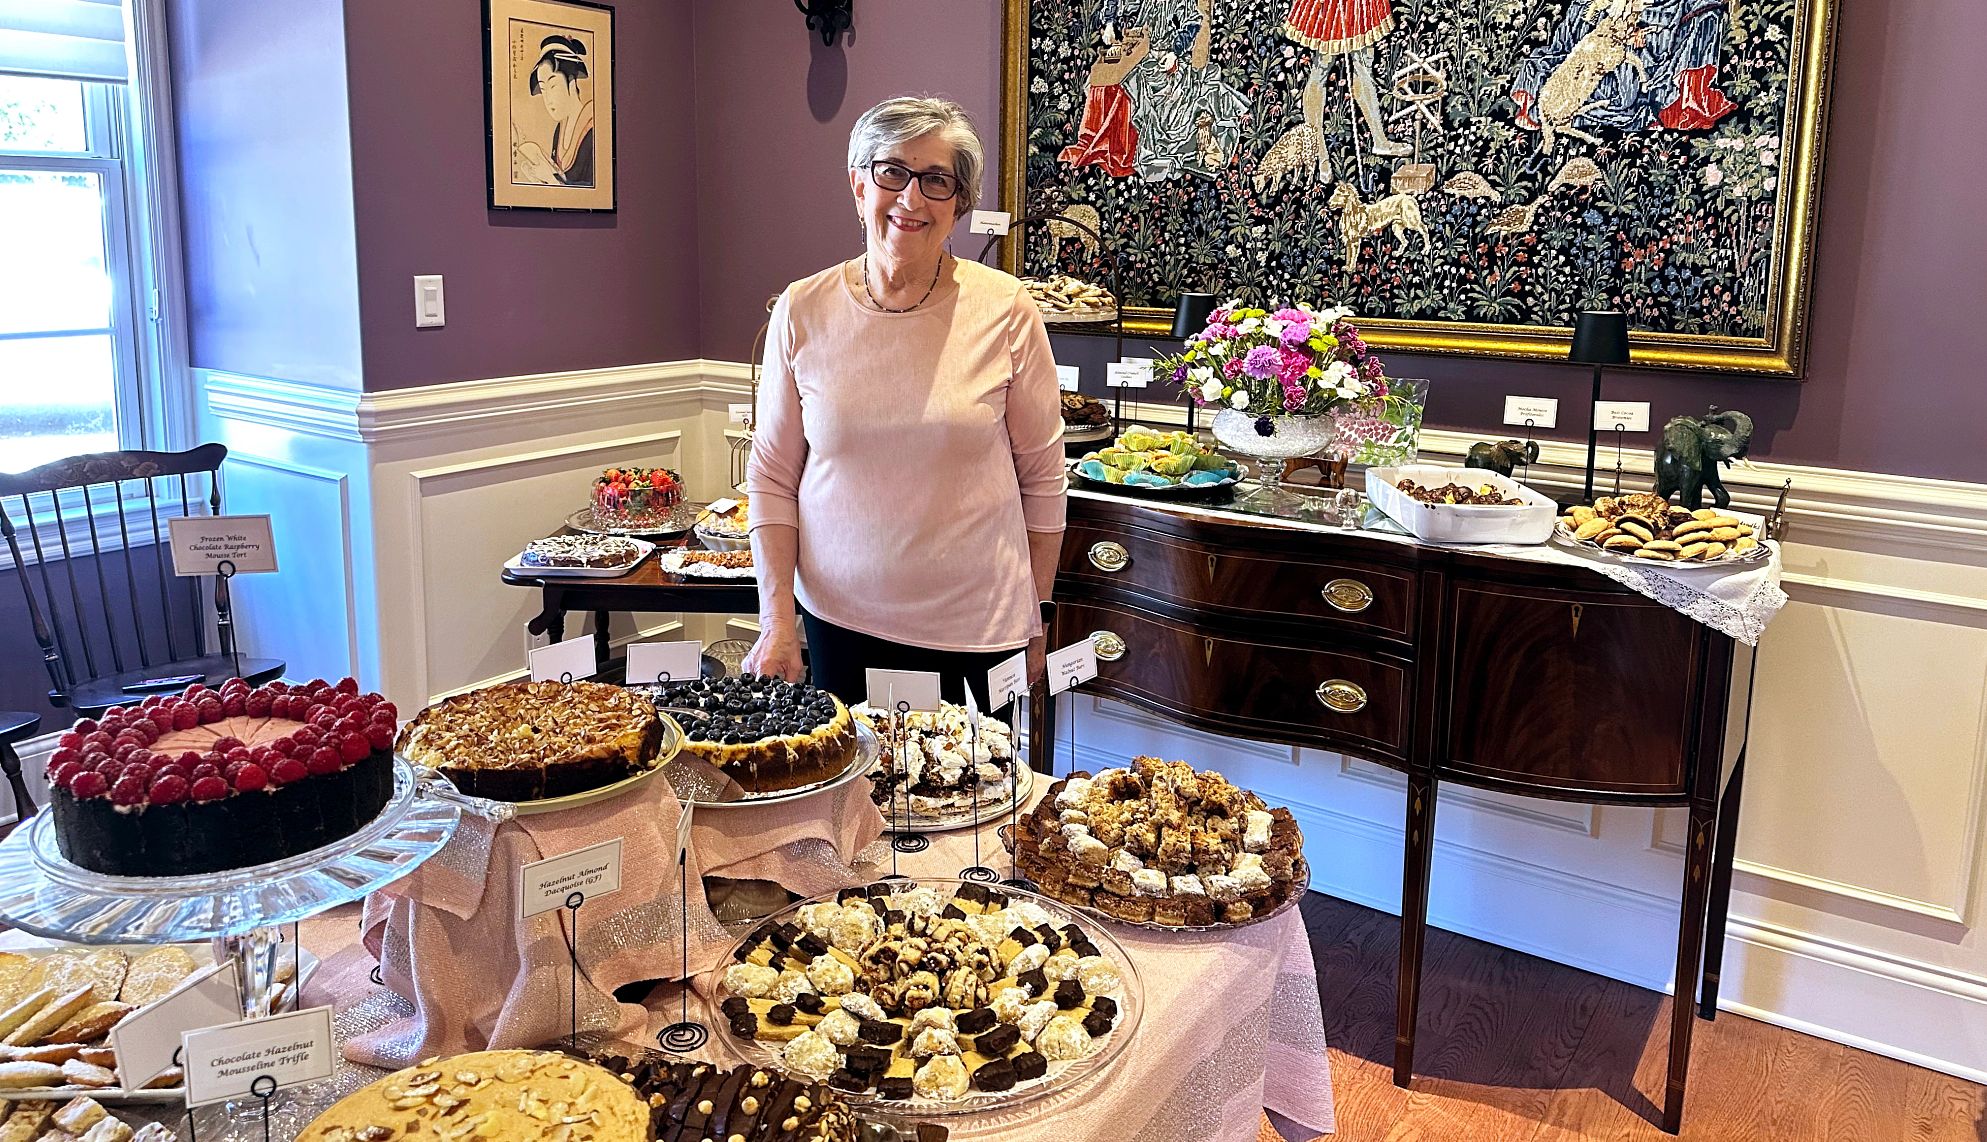 Barbara Beckerman standing next to various baked goods